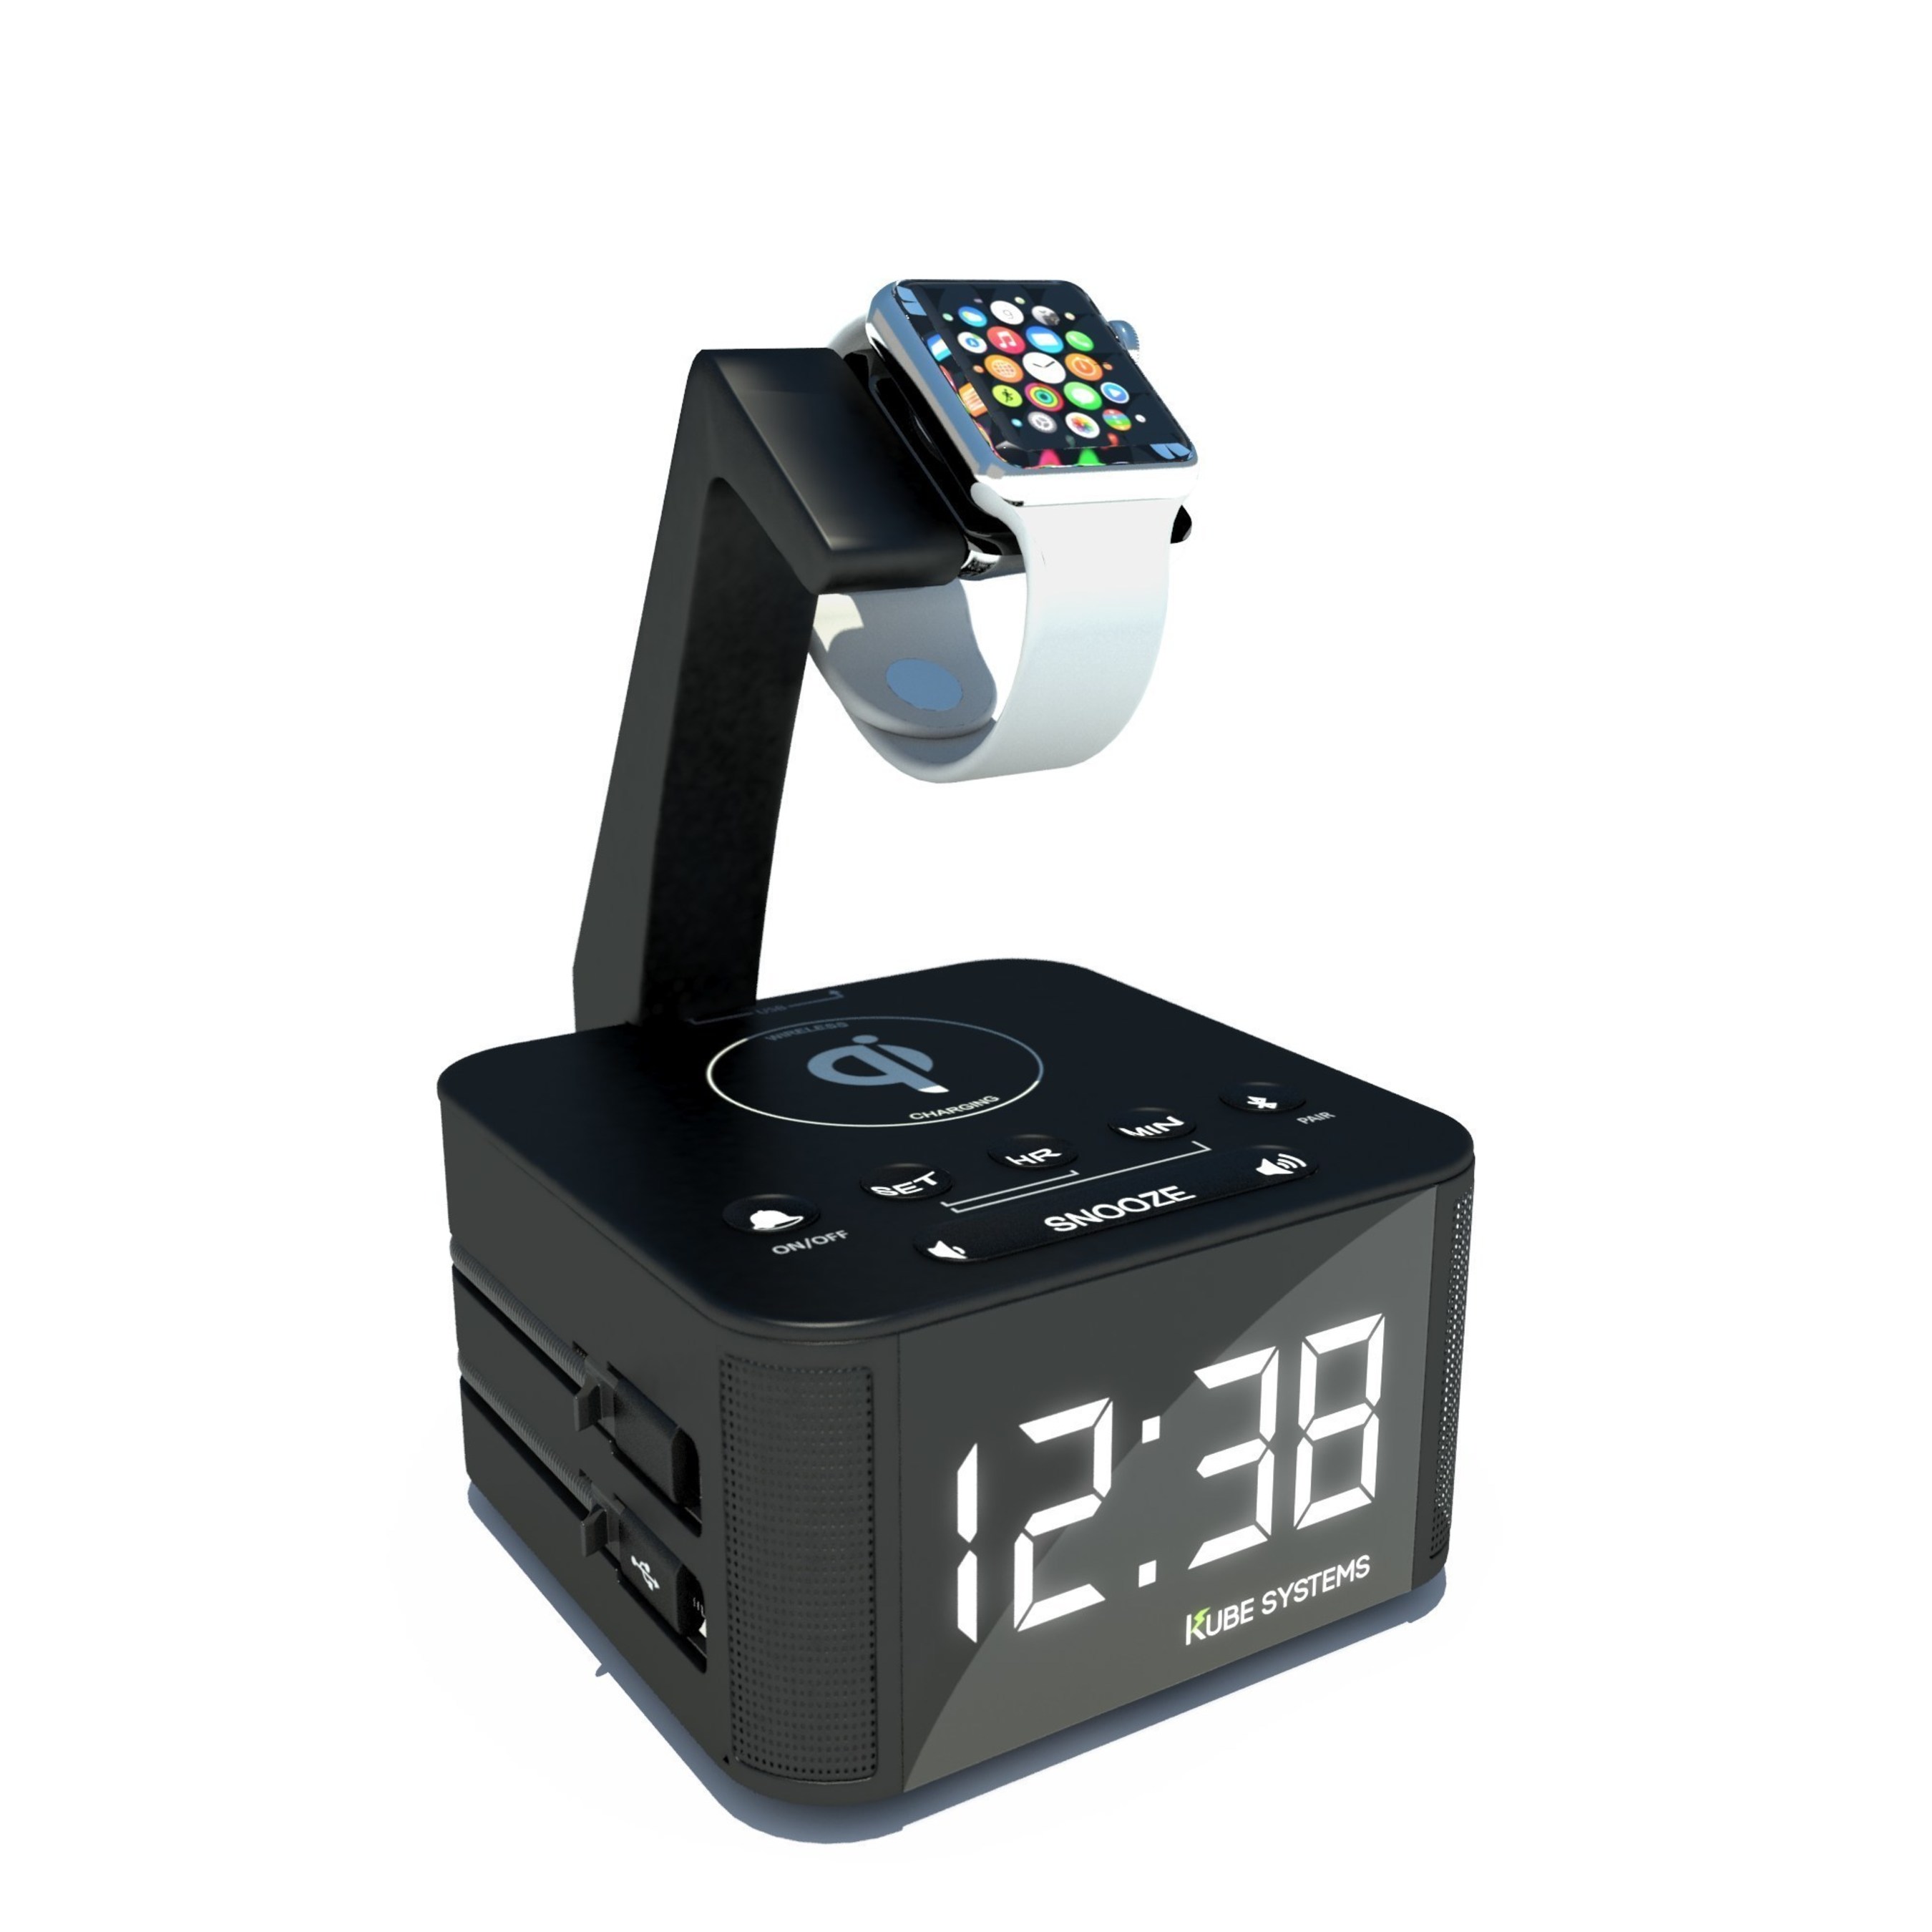 KS Clock(TM) with apple watch attachment